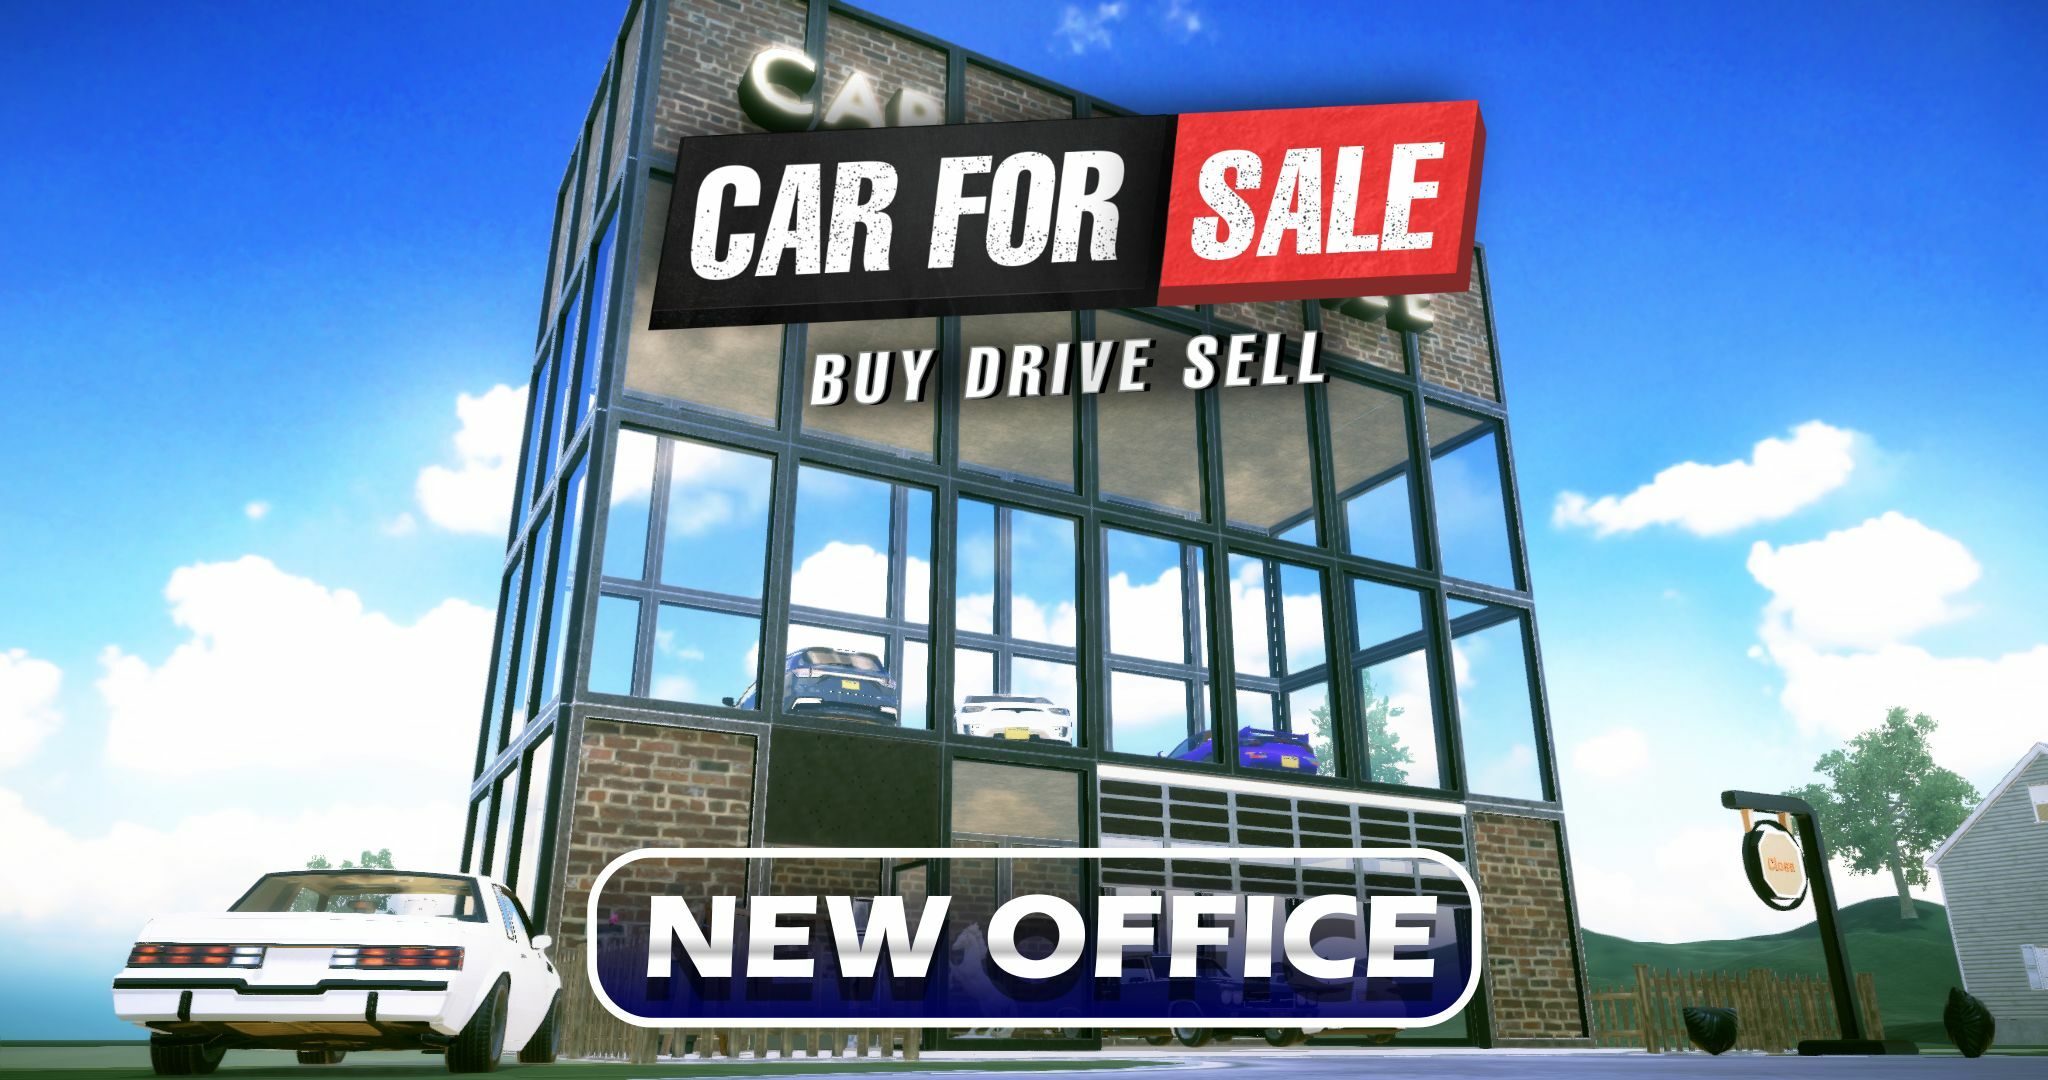 Car For Sale Simulator 2023 on Steam